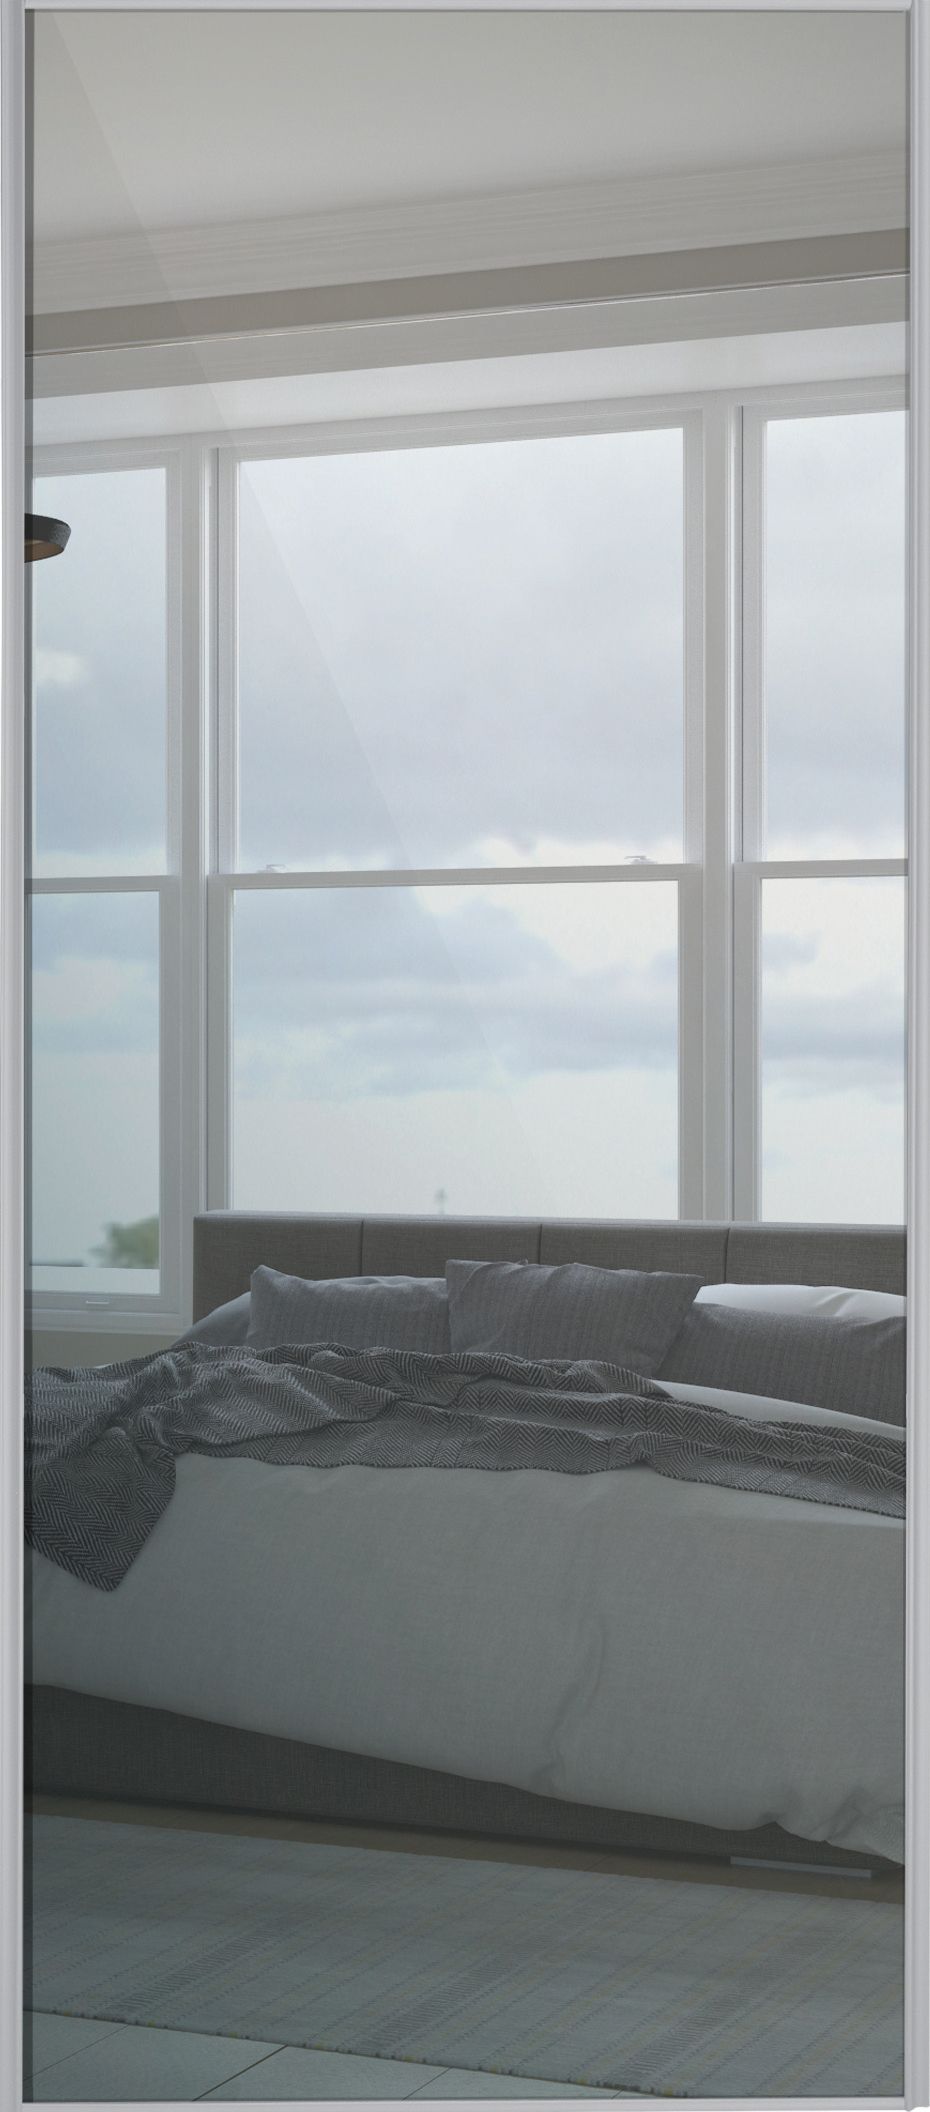 Image of Spacepro Sliding Wardrobe Door Silver Framed Single Panel Mirror - 2220 x 610mm